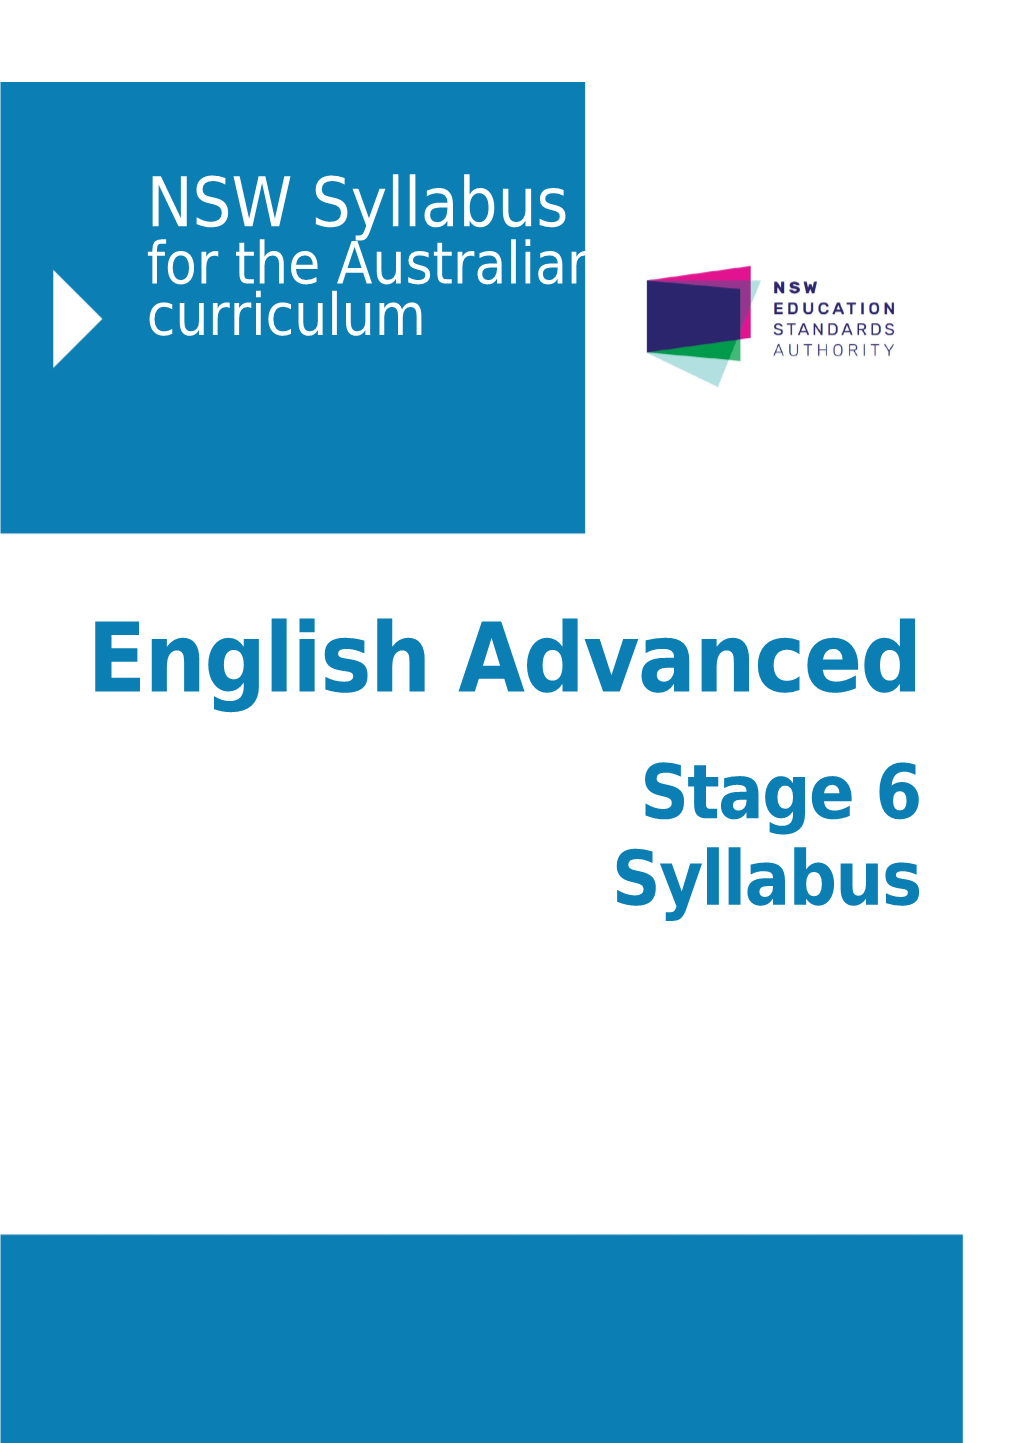 English Advanced Stage 6 Syllabus 2017